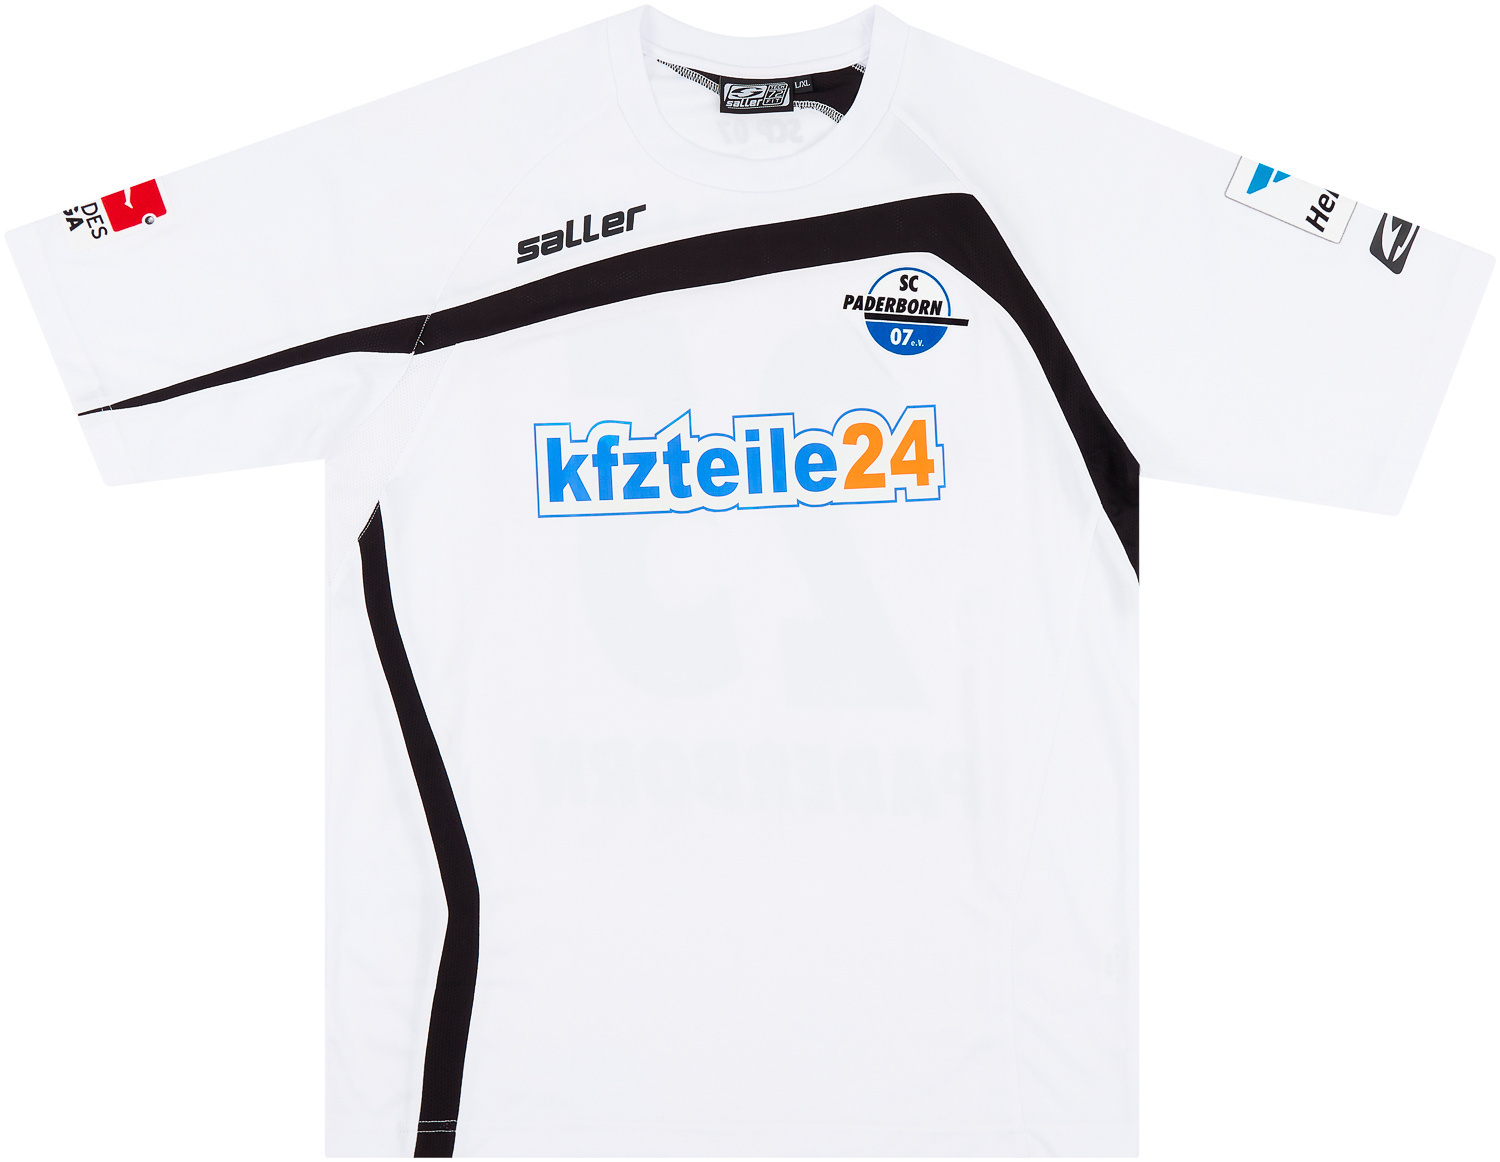 Paderborn  Dritte Shirt (Original)